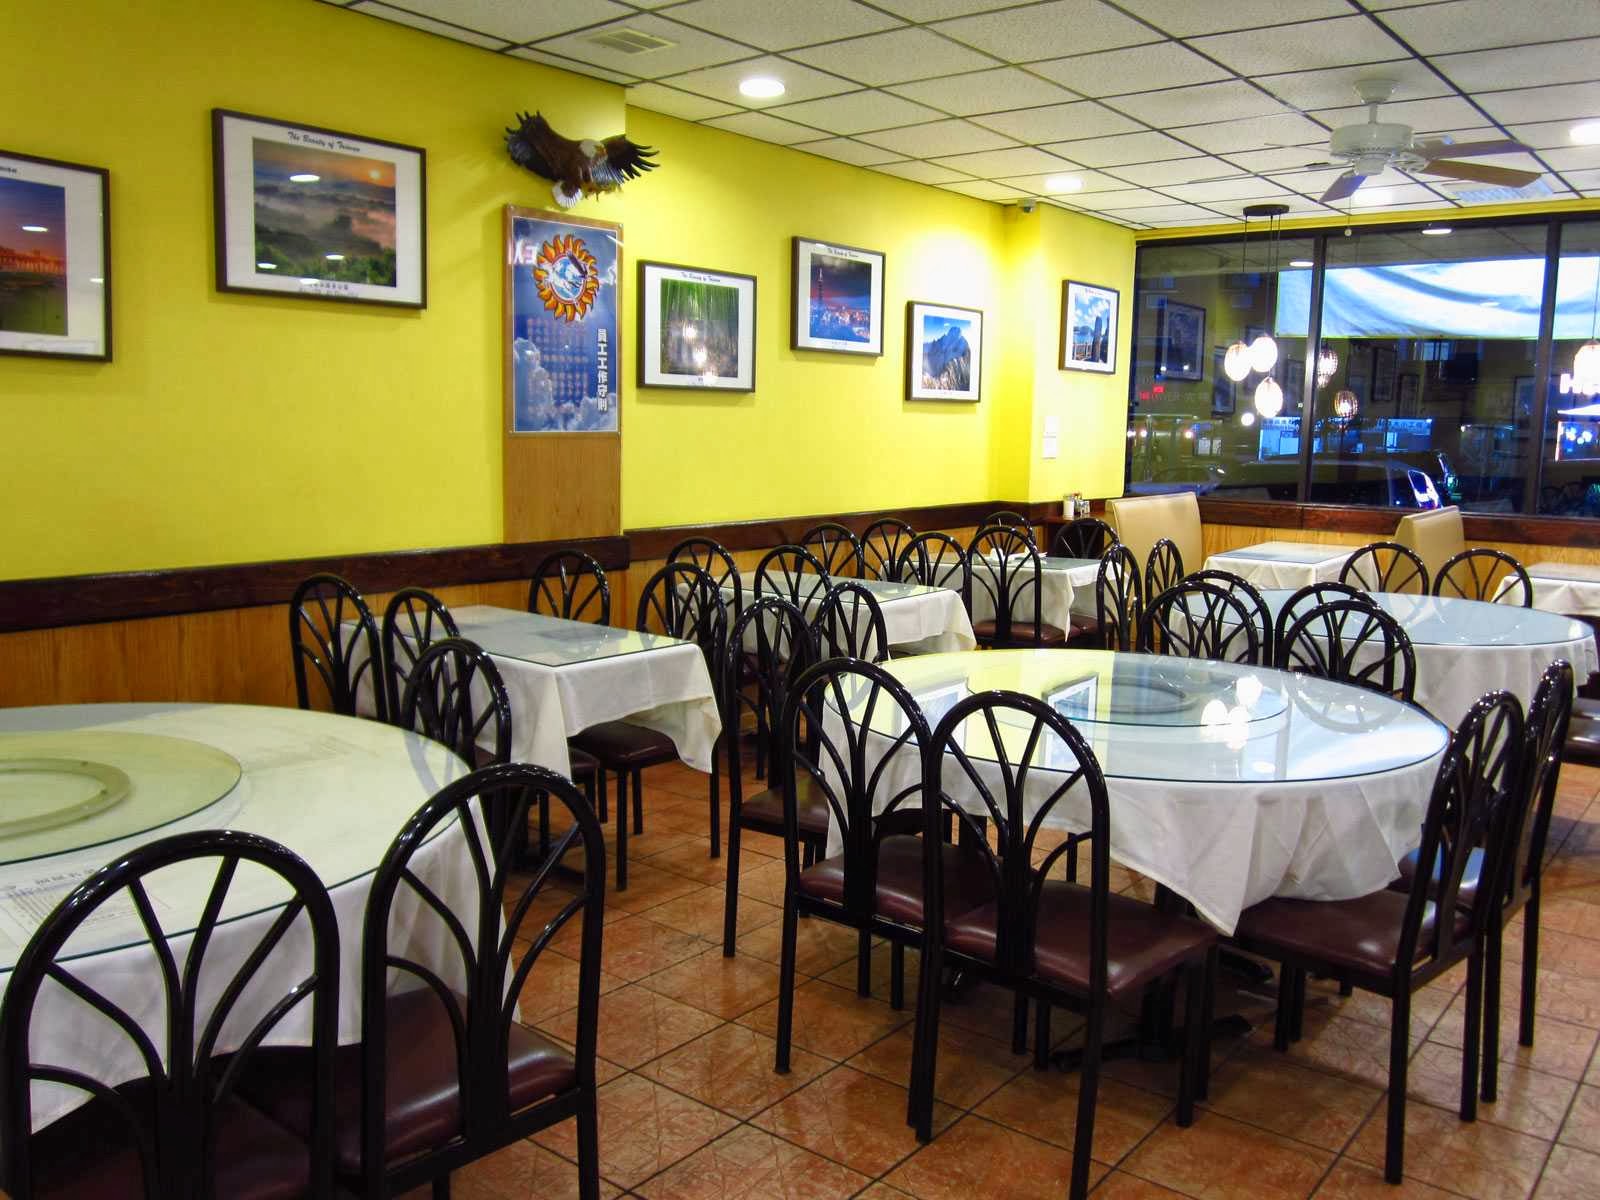 Photo of OK Ryan Restaurant in Flushing City, New York, United States - 2 Picture of Restaurant, Food, Point of interest, Establishment